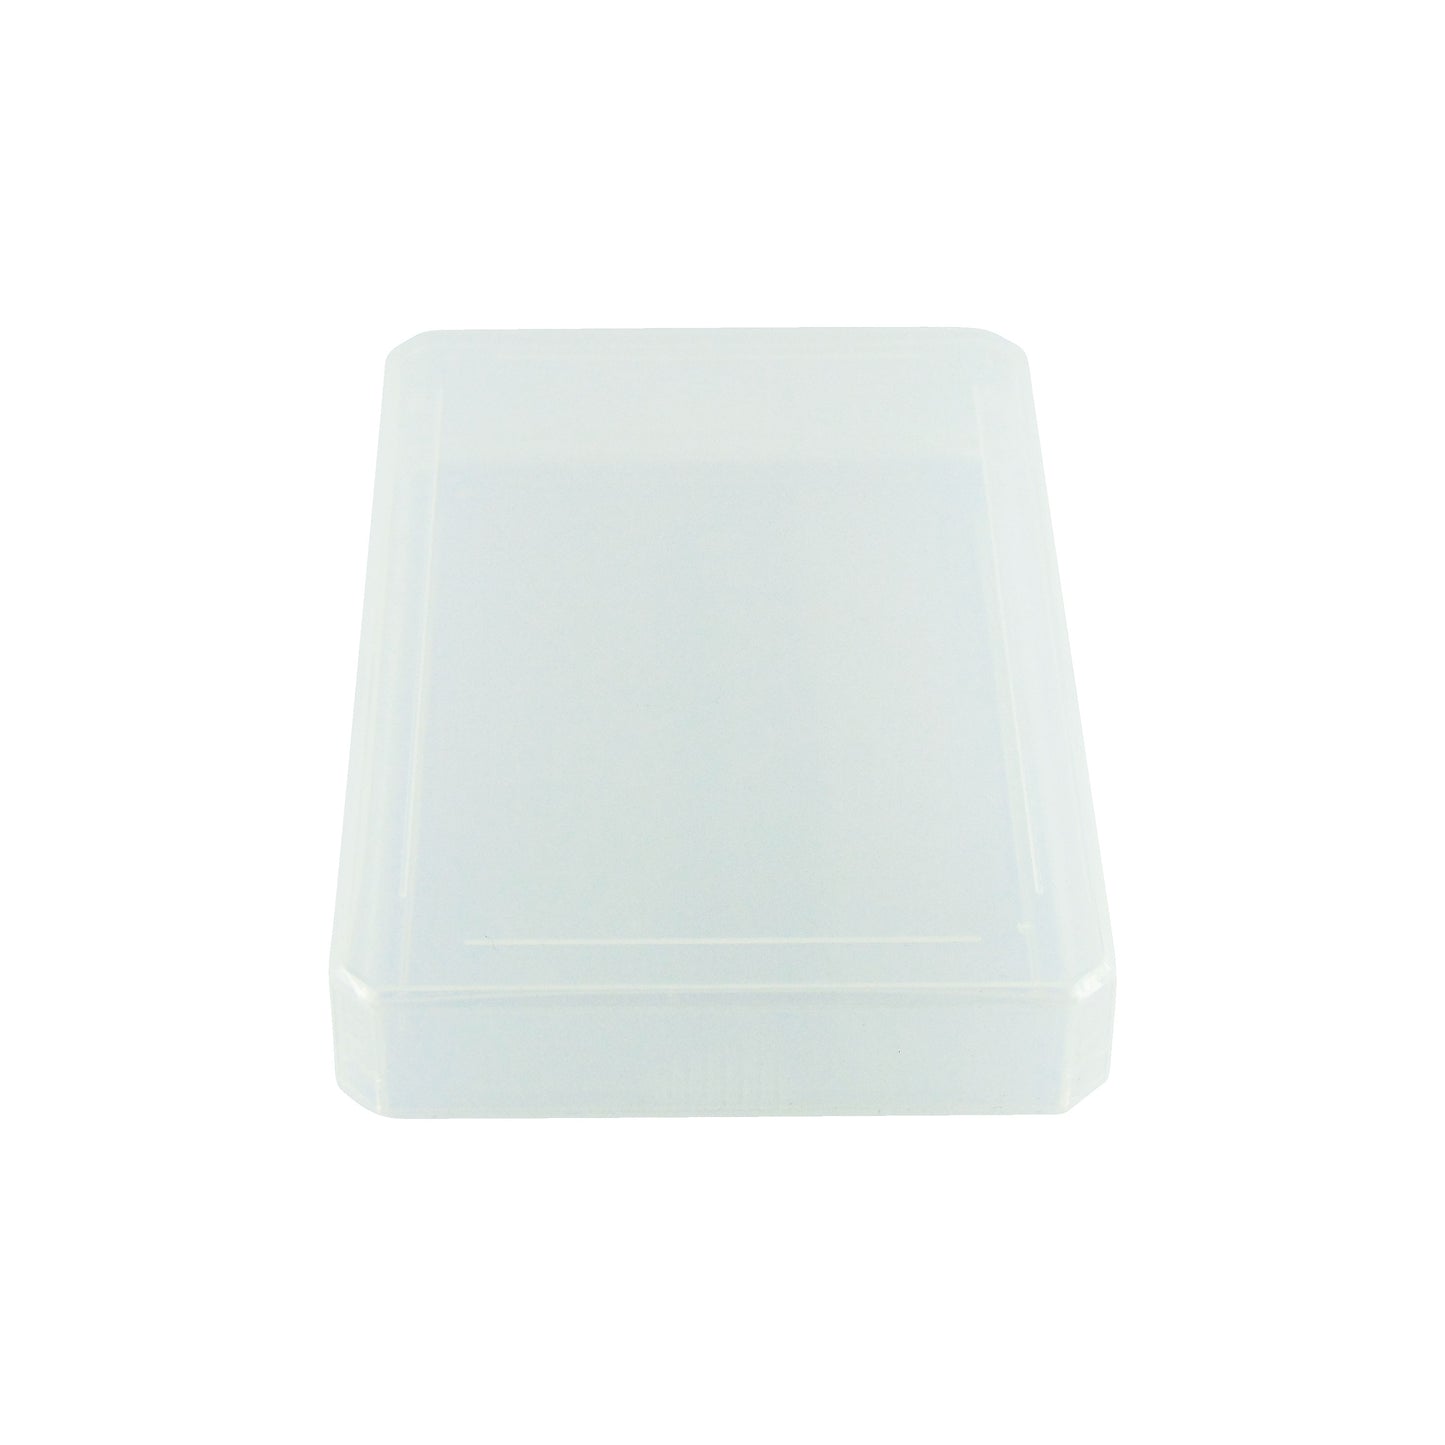 10 Stück - Kunststoffbox / Spielkartenbox (transparent, 9,7 x 6,5 x 1,5 cm)